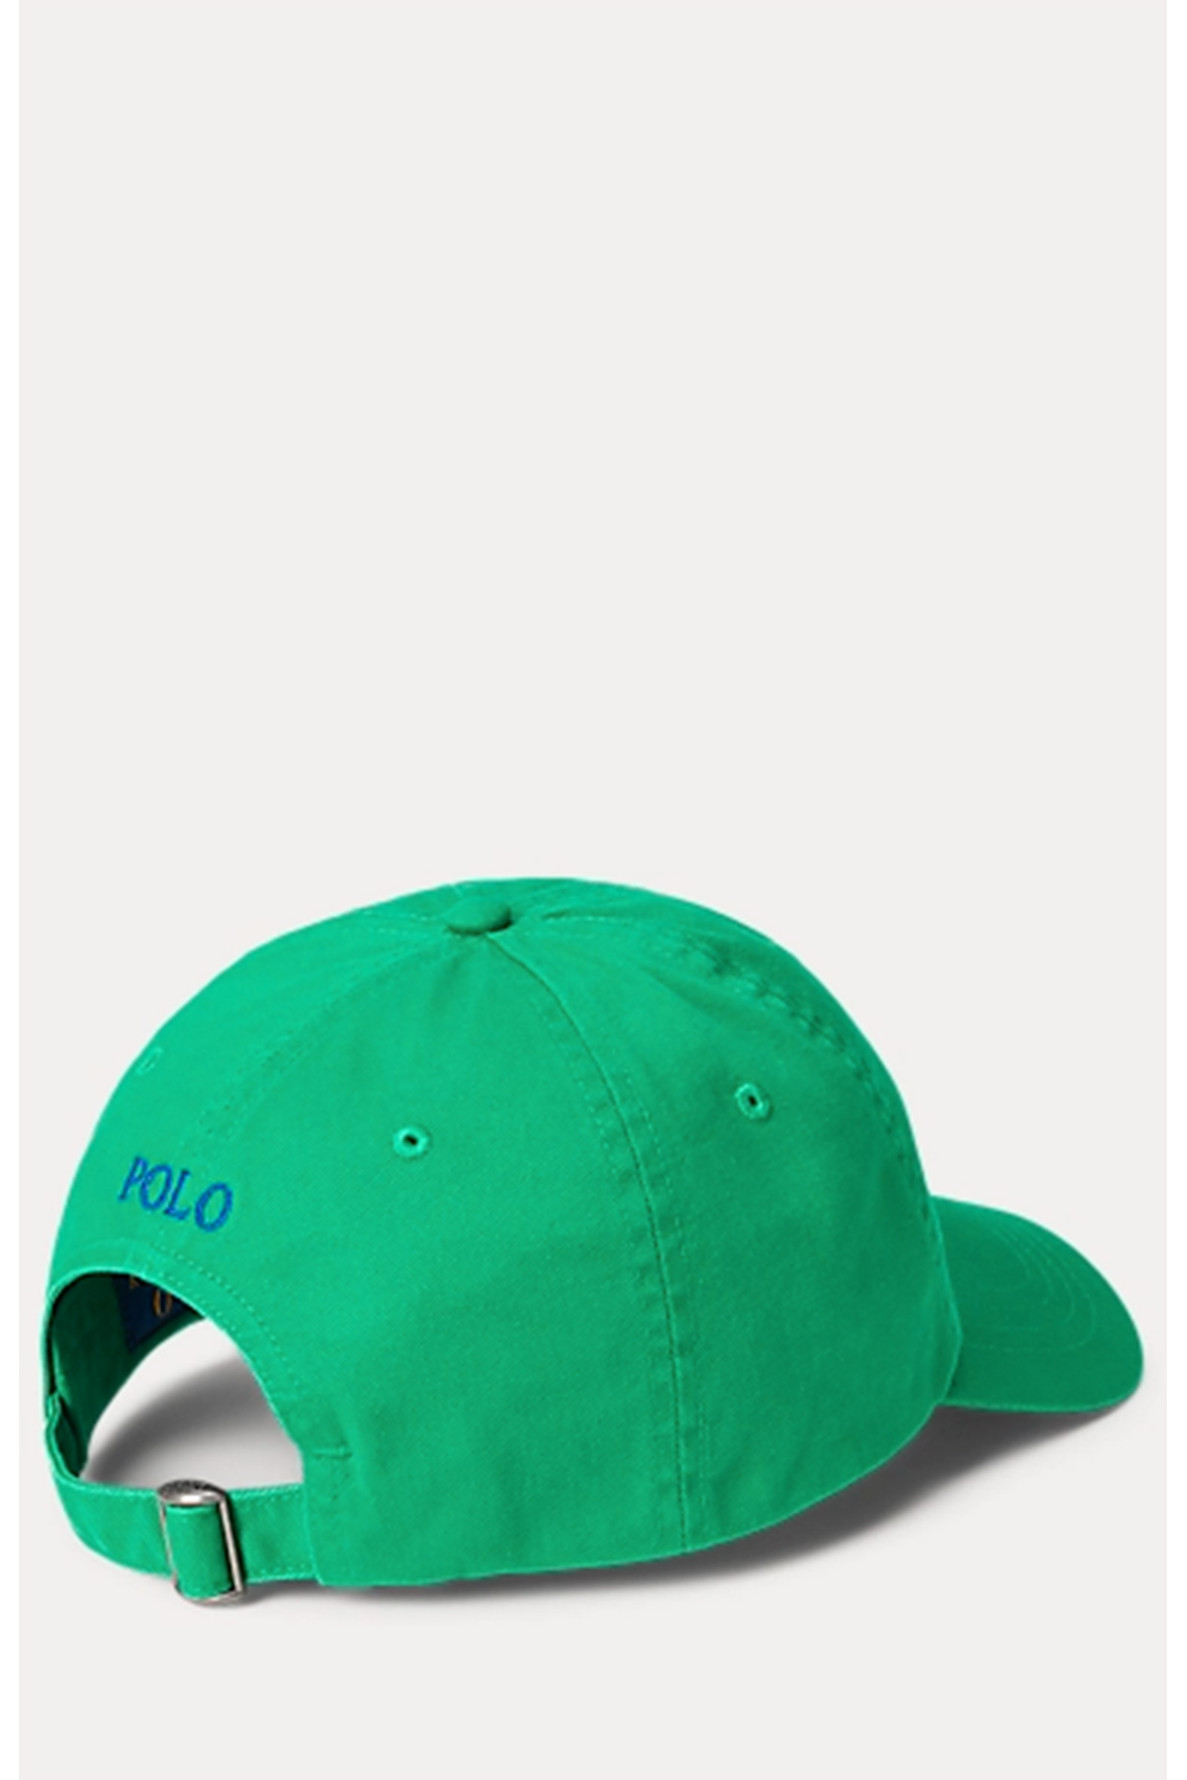 BILLARD GREEN CAP - 2